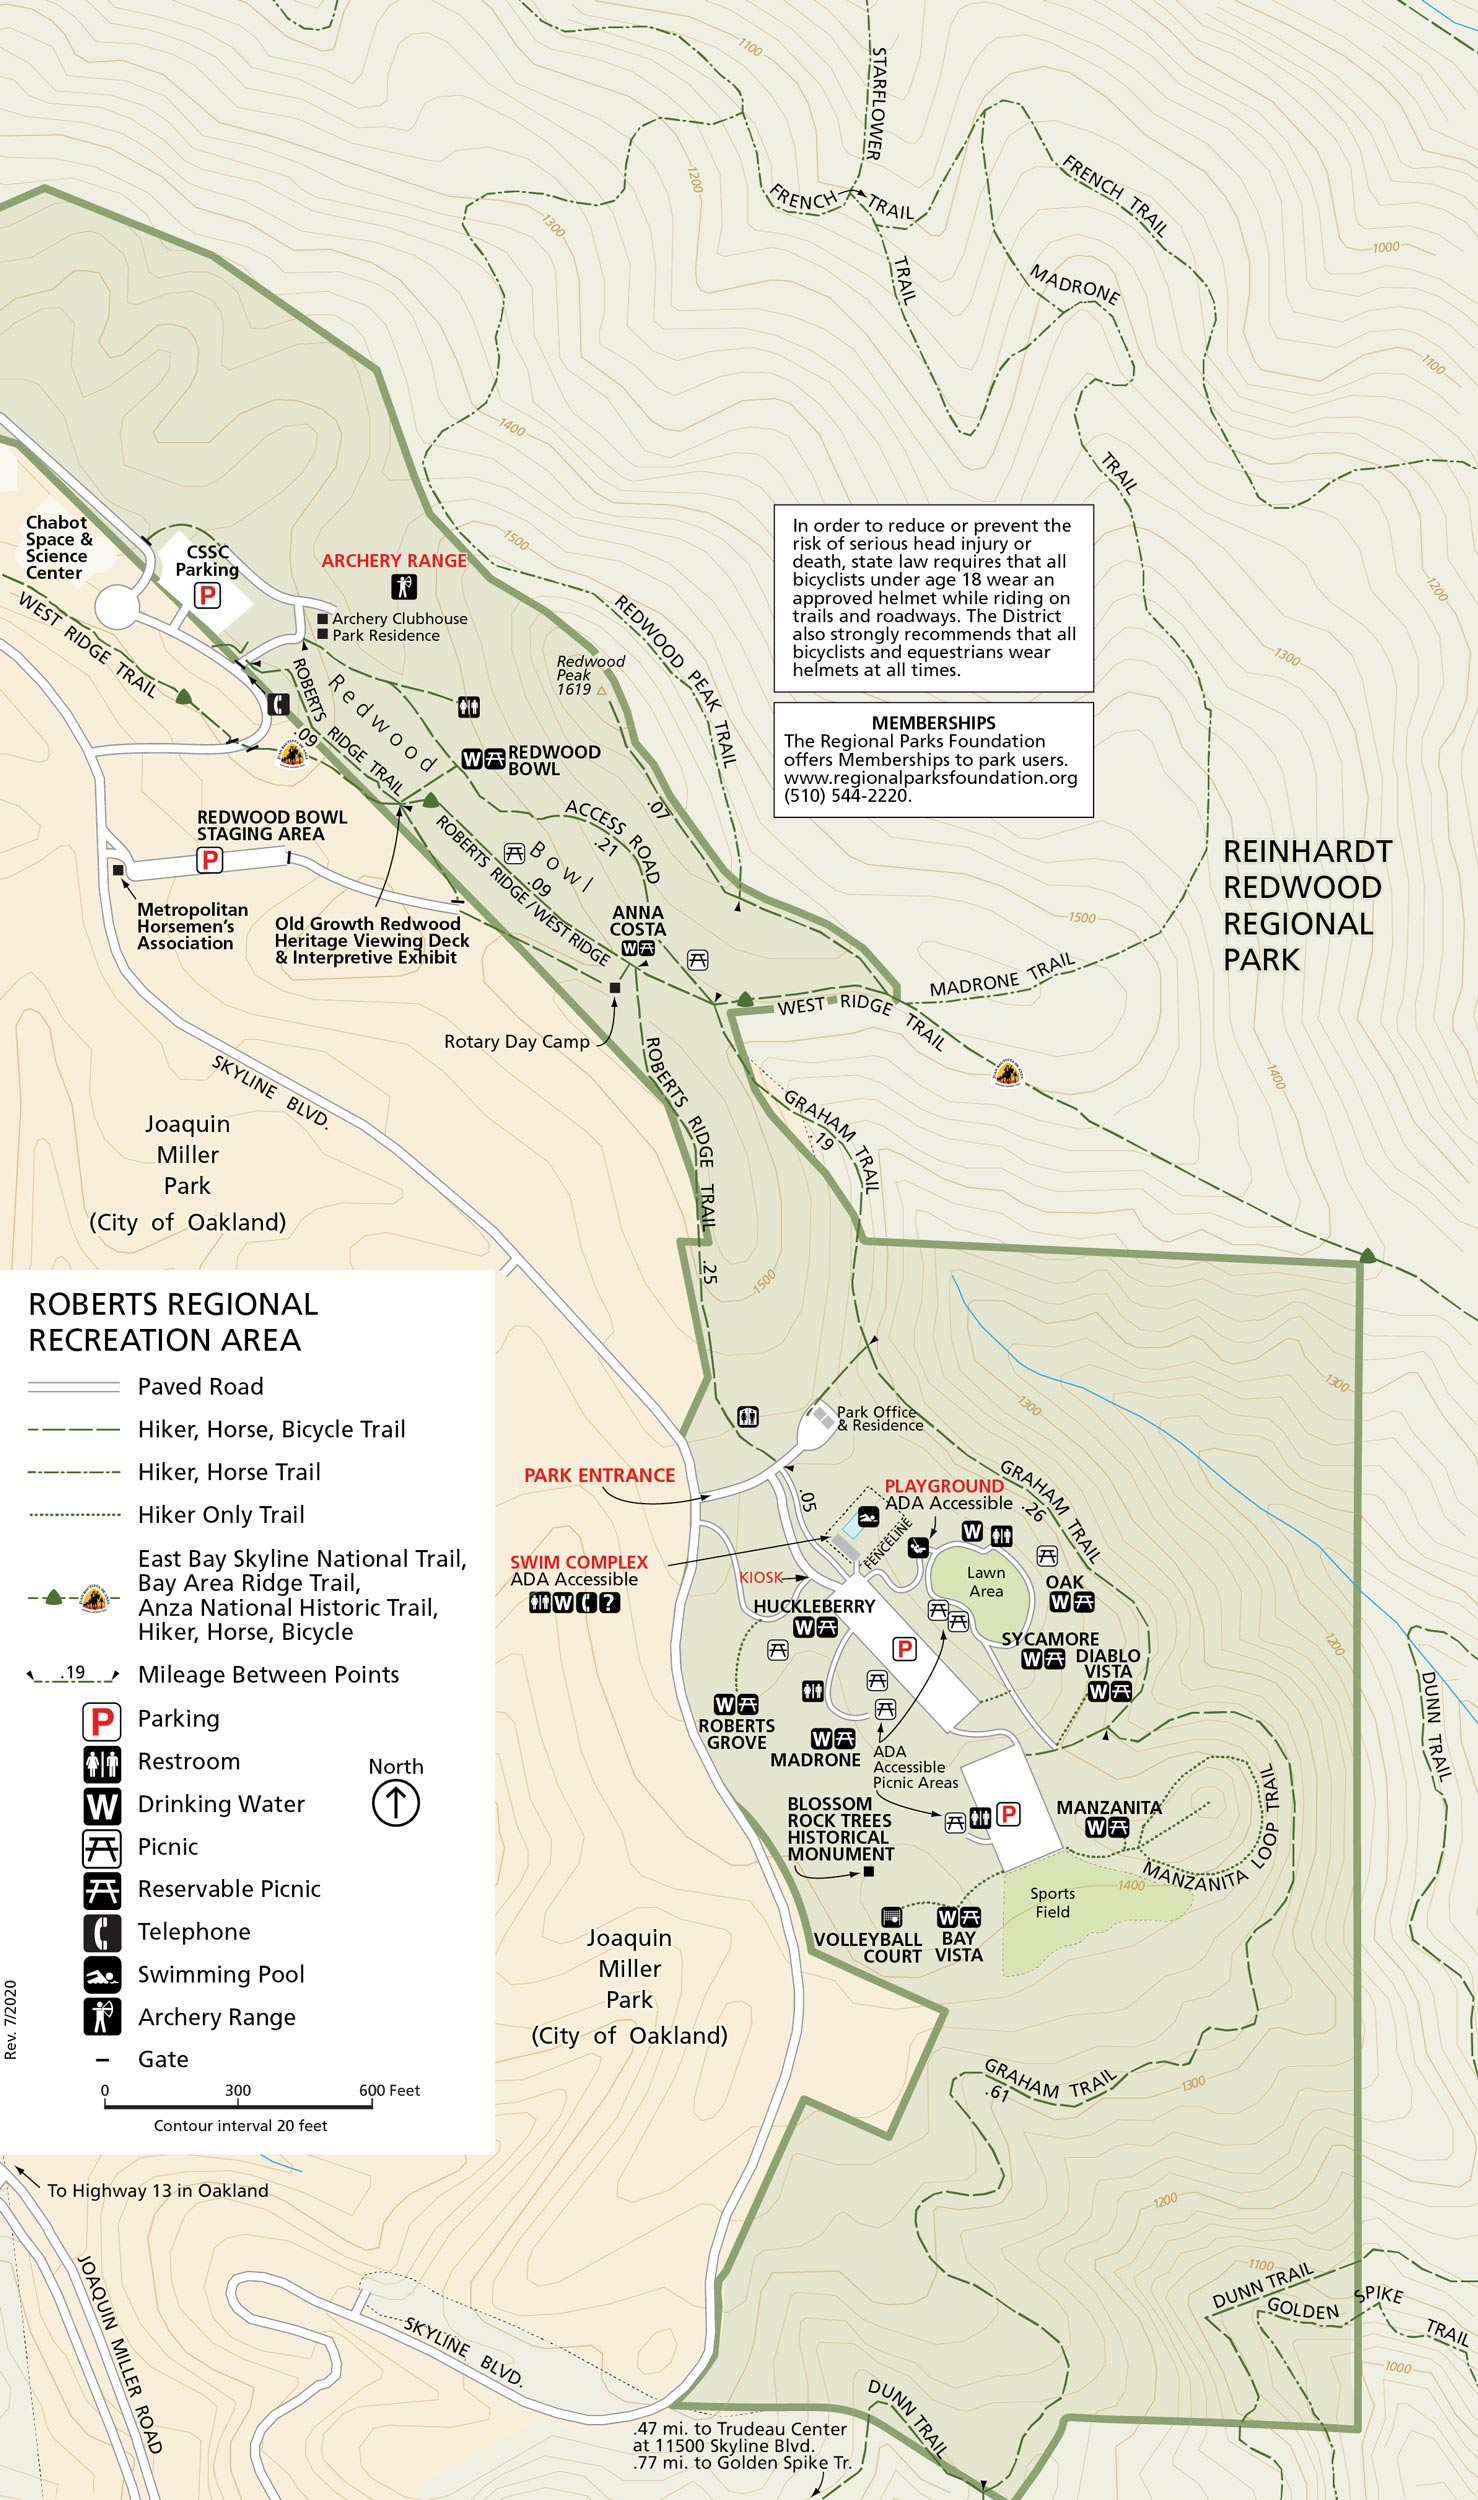 Map of Roberts Regional Recreation Area